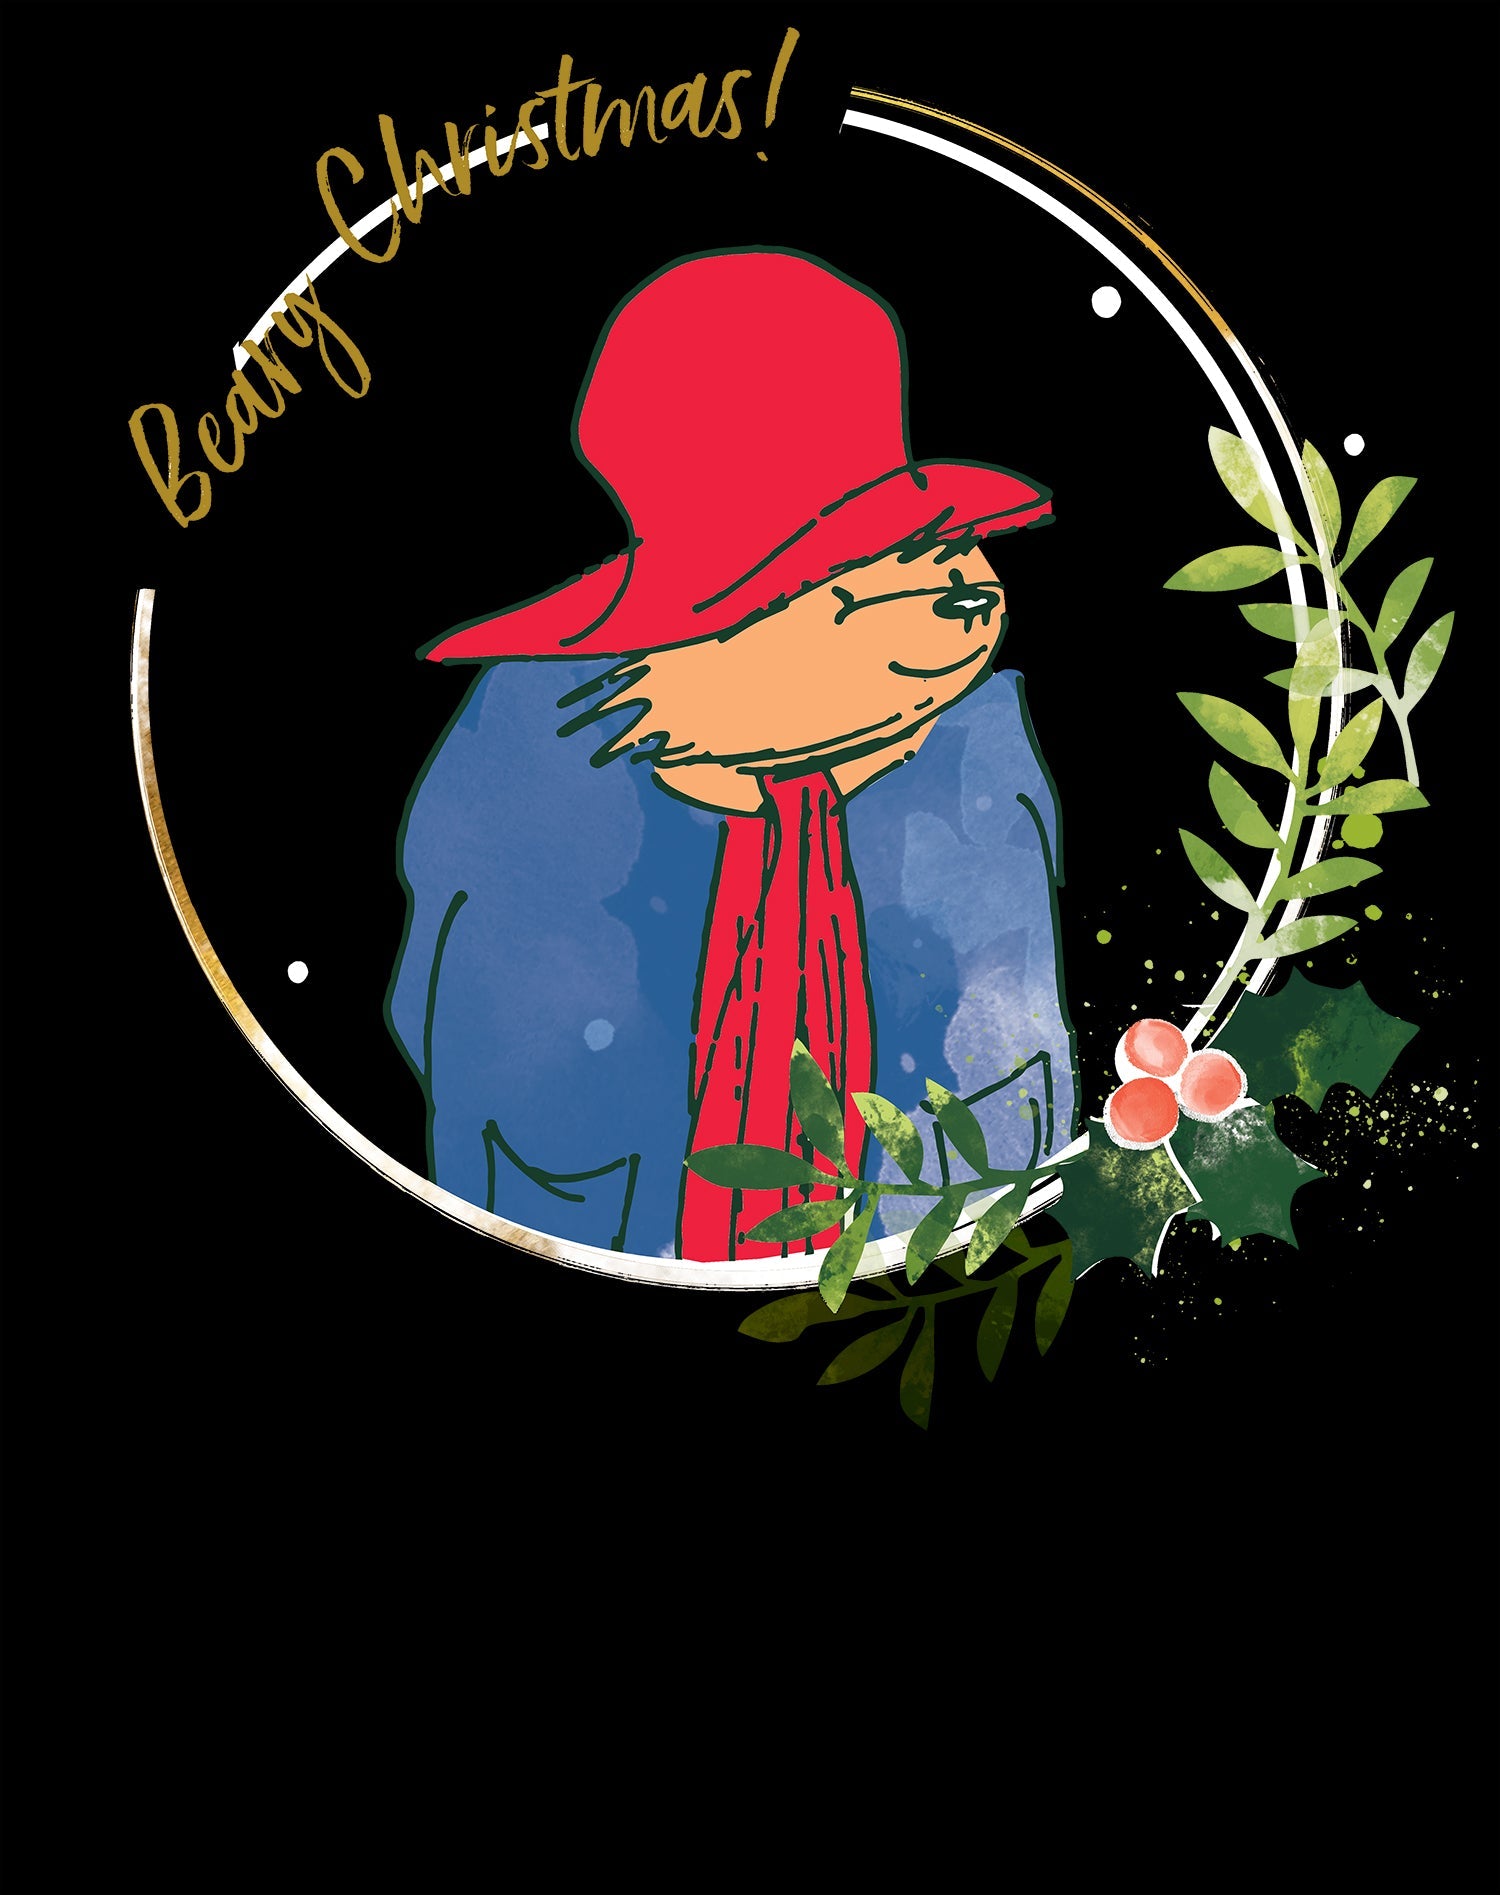 Paddington Bear Xmas Beary Christmas Merry Mistletoe Meme Women's T-Shirt